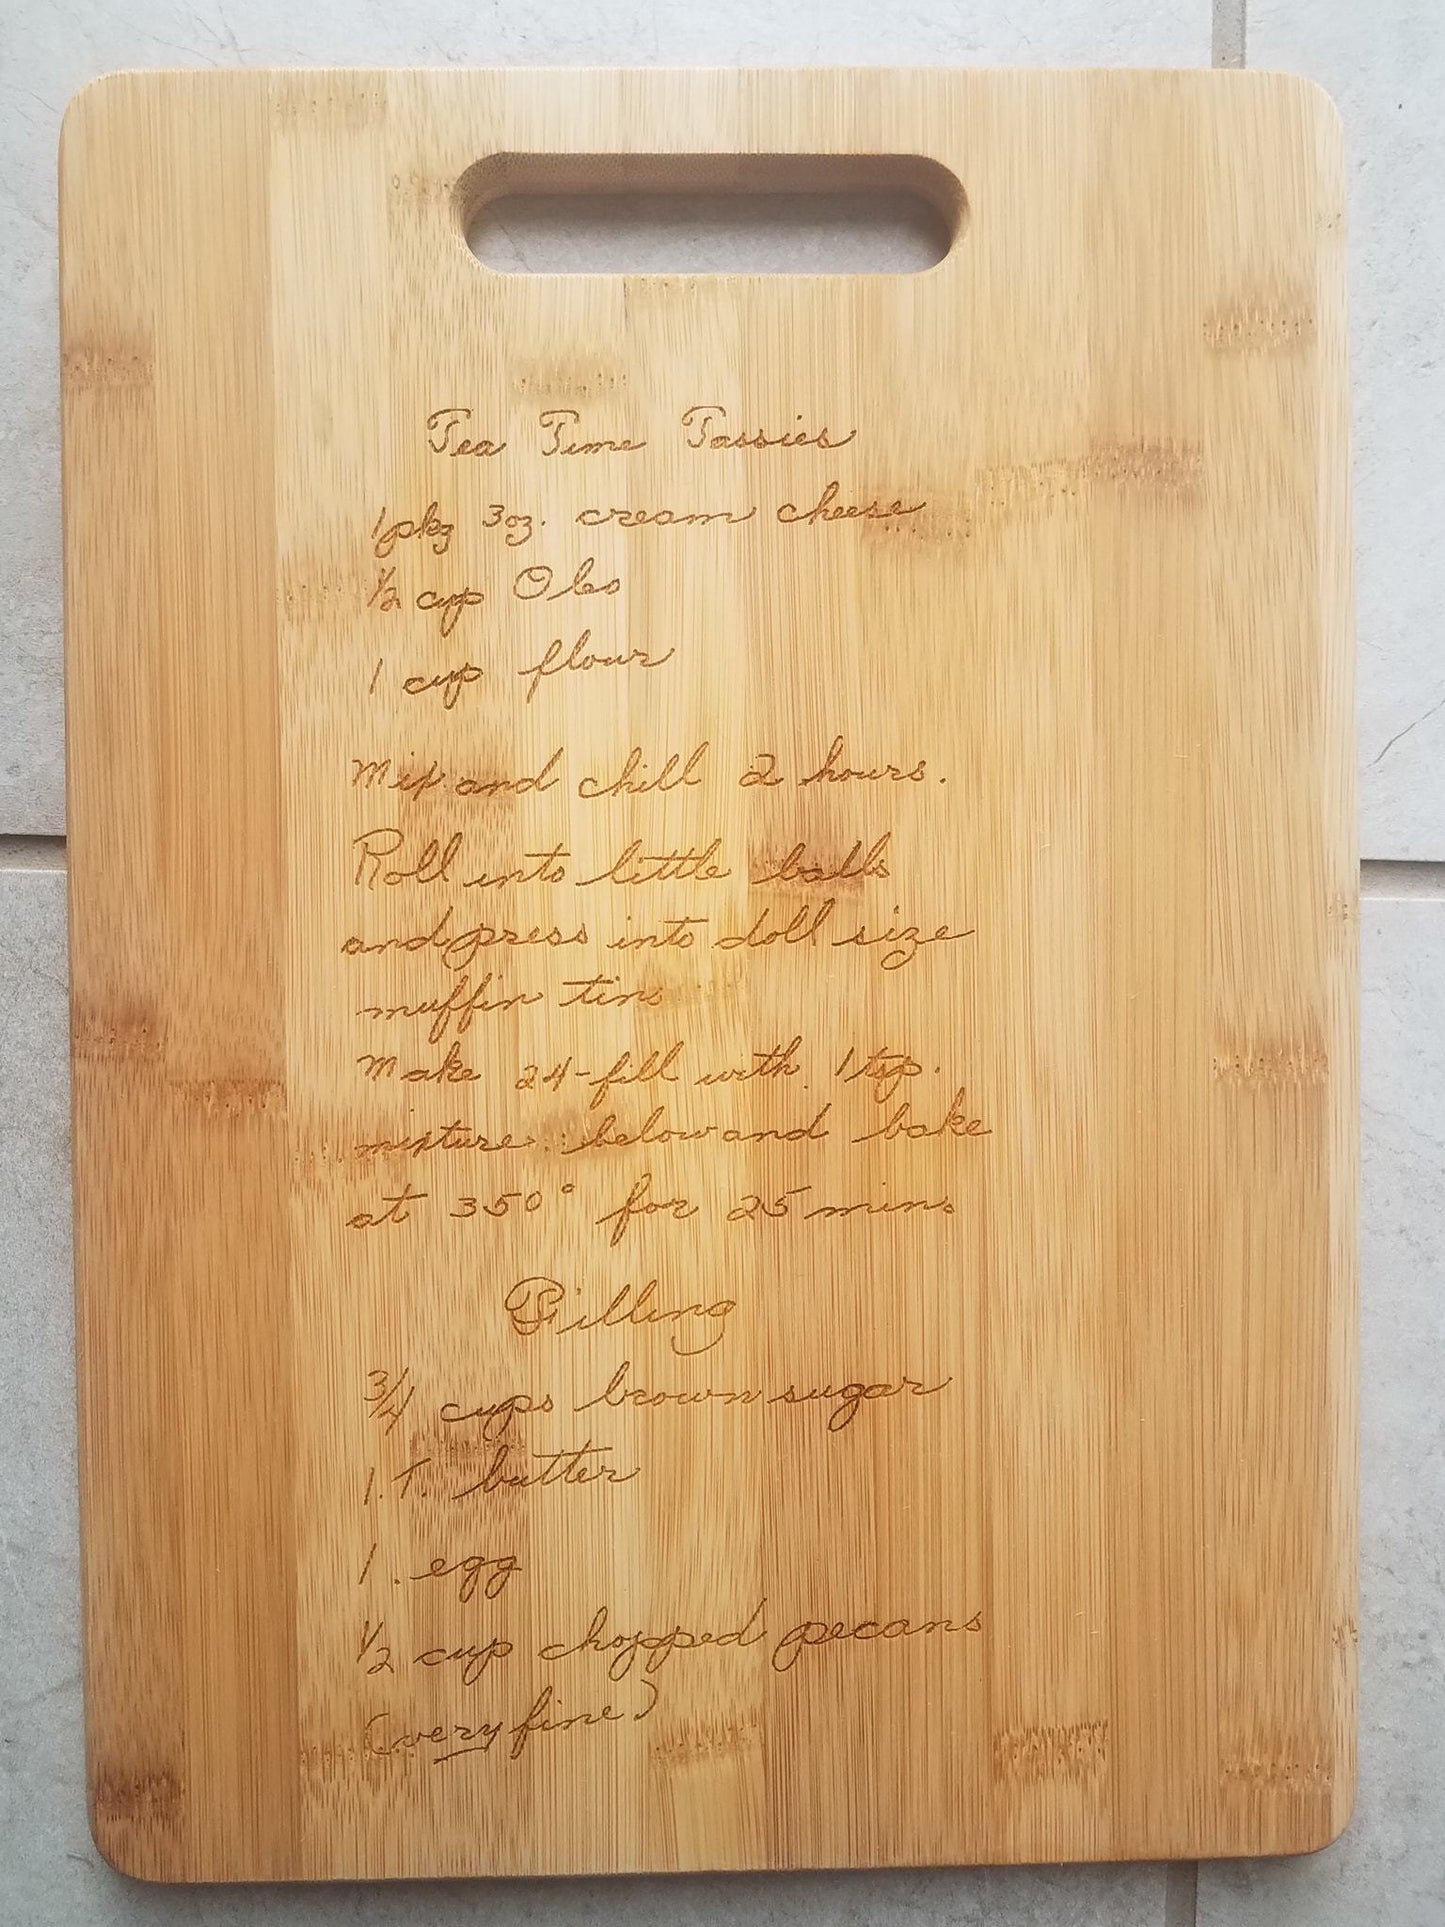 Custom Engraved Cutting Board With Recipe